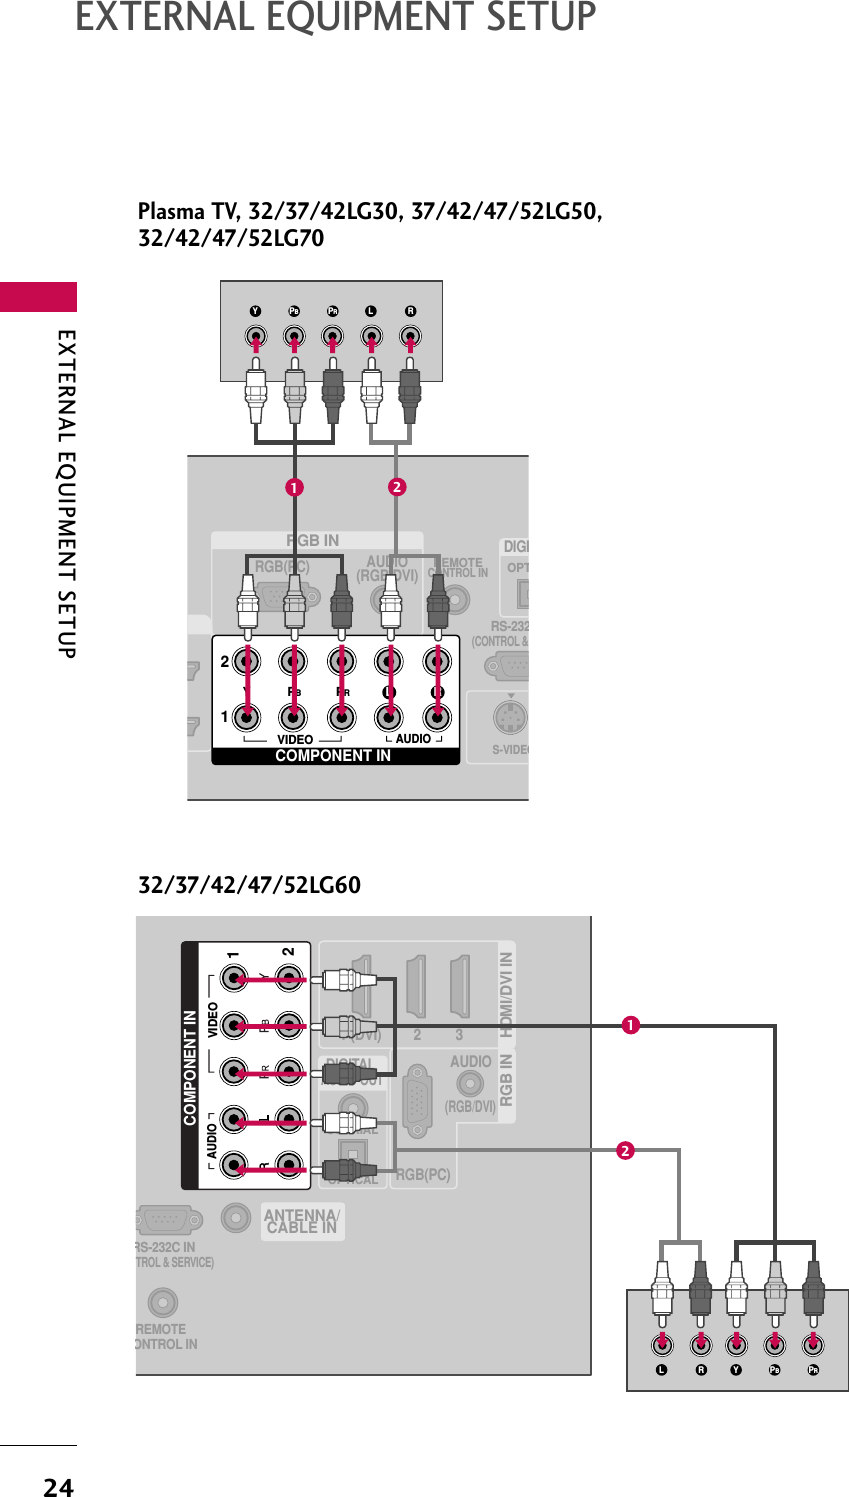 EXTERNAL EQUIPMENT SETUP24EXTERNAL EQUIPMENT SETUPRGB INAUDIO(RGB/DVI)RGB(PC)REMOTECONTROL INRS-232(CONTROL &amp; OPTDIGIS-VIDEOCOMPONENT IN12VIDEOLYPBPRRAUDIOY L RPBPR12(RGB/DVI)AUDIORGB(PC)REMOTEONTROL INRS-232C INTROL &amp; SERVICE)OPTICALCOAXIALDIGITAL AUDIO OUT1 (DVI) 2 3HDMI/DVI IN RGB IN ANTENNA/CABLE INCOMPONENT IN21VIDEOAUDIOYL R PBPR1232/37/42/47/52LG60Plasma TV, 32/37/42LG30, 37/42/47/52LG50,32/42/47/52LG70